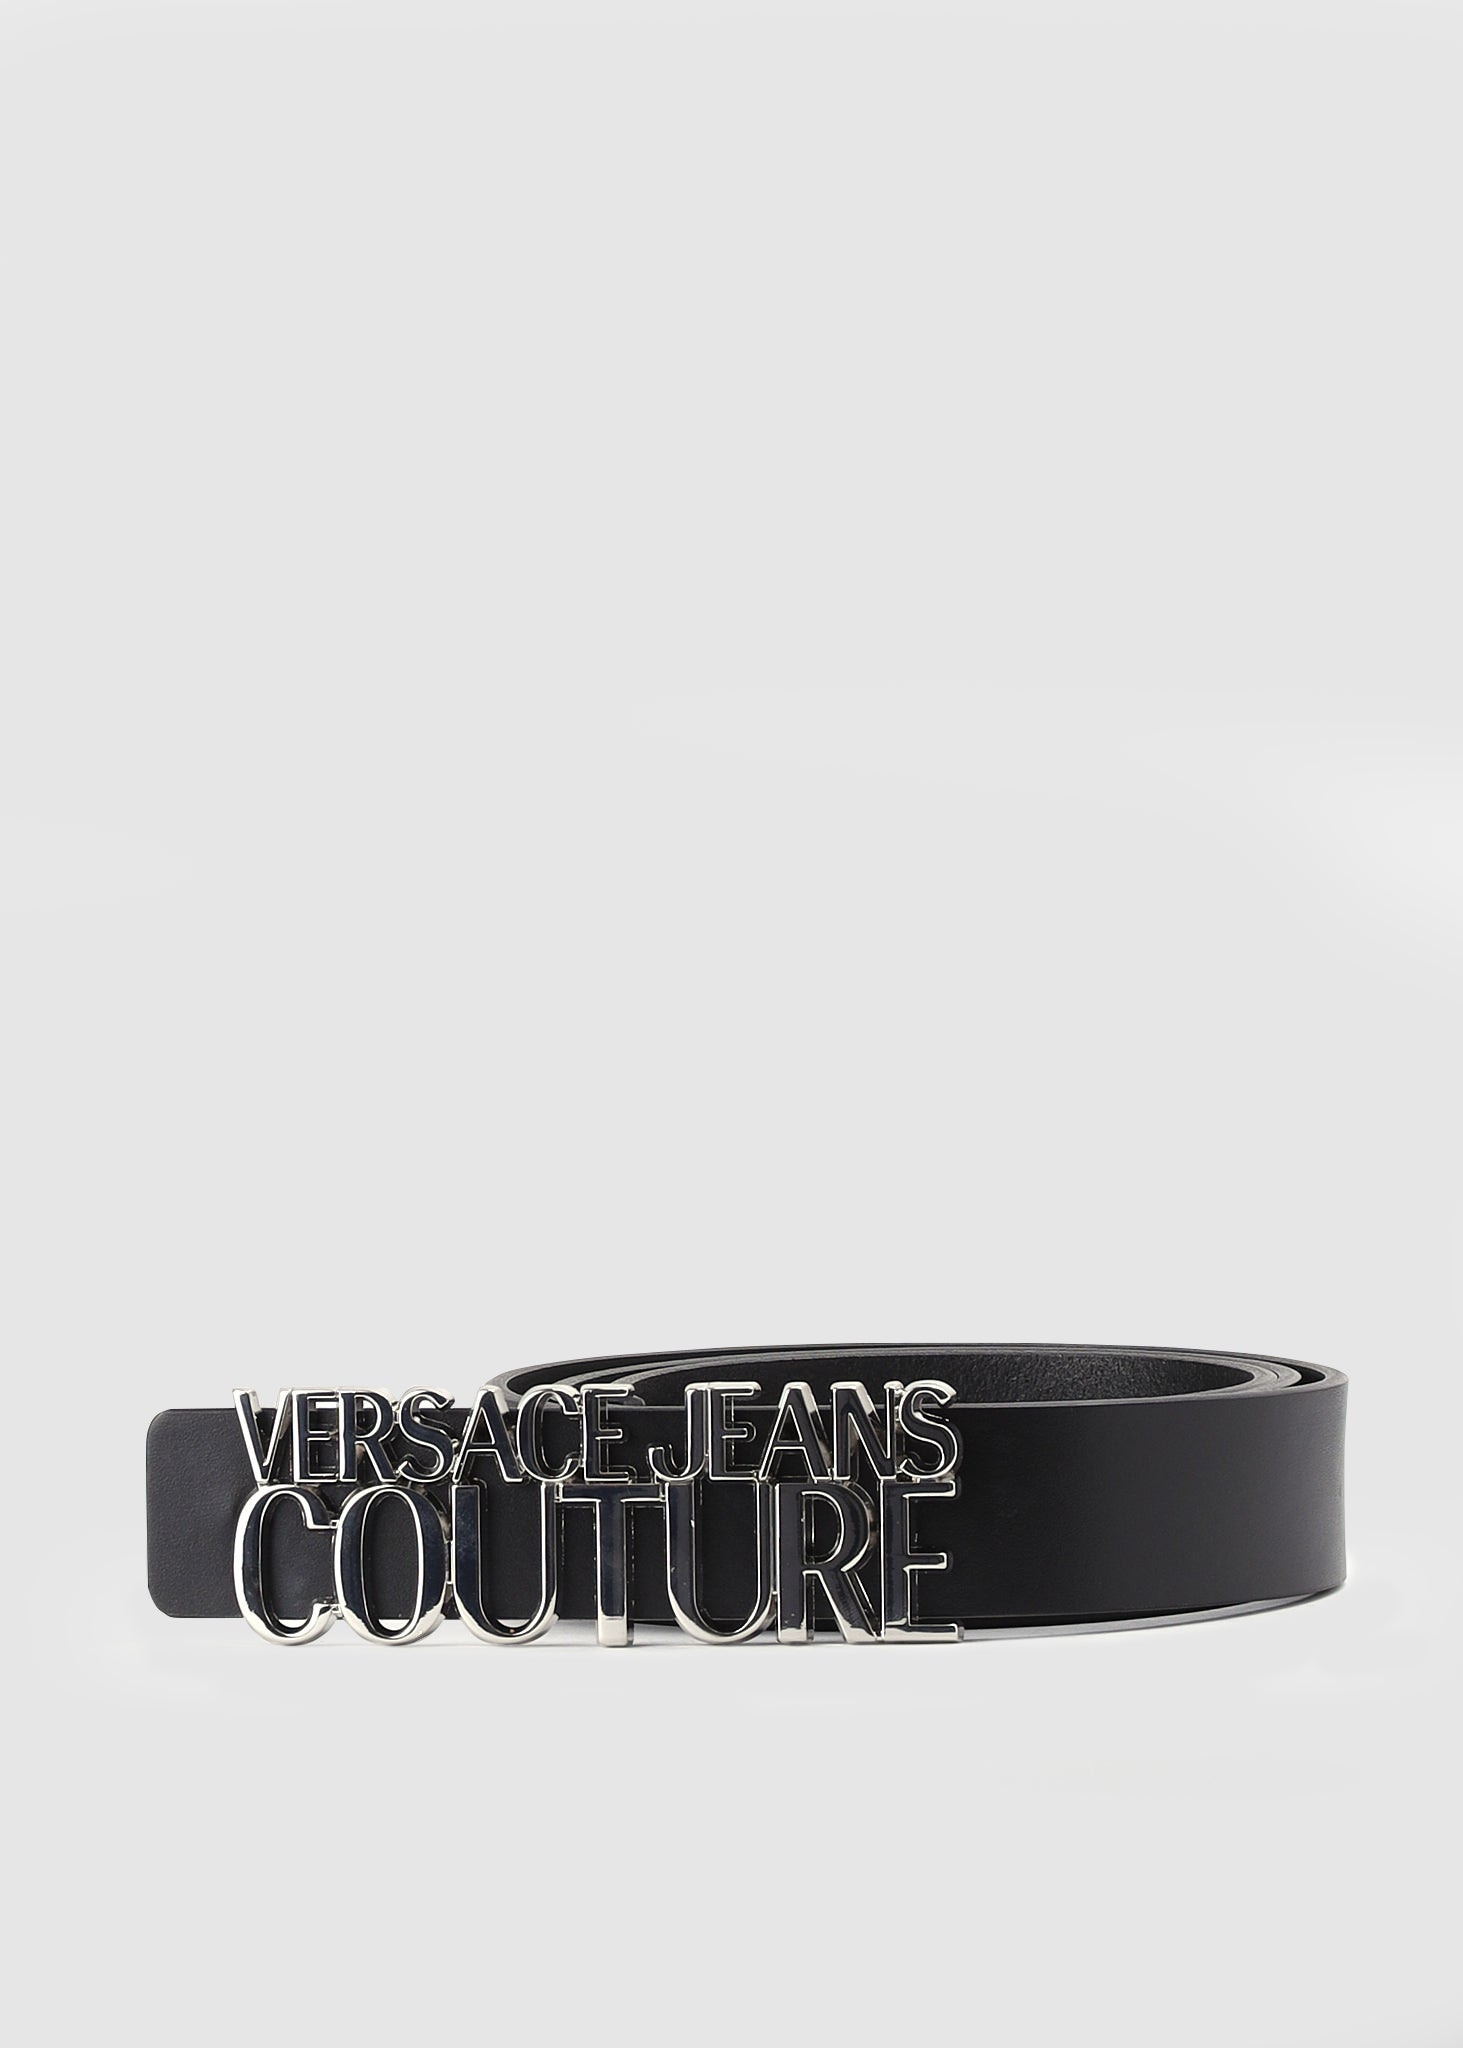 Versace jeans couture men’s belt